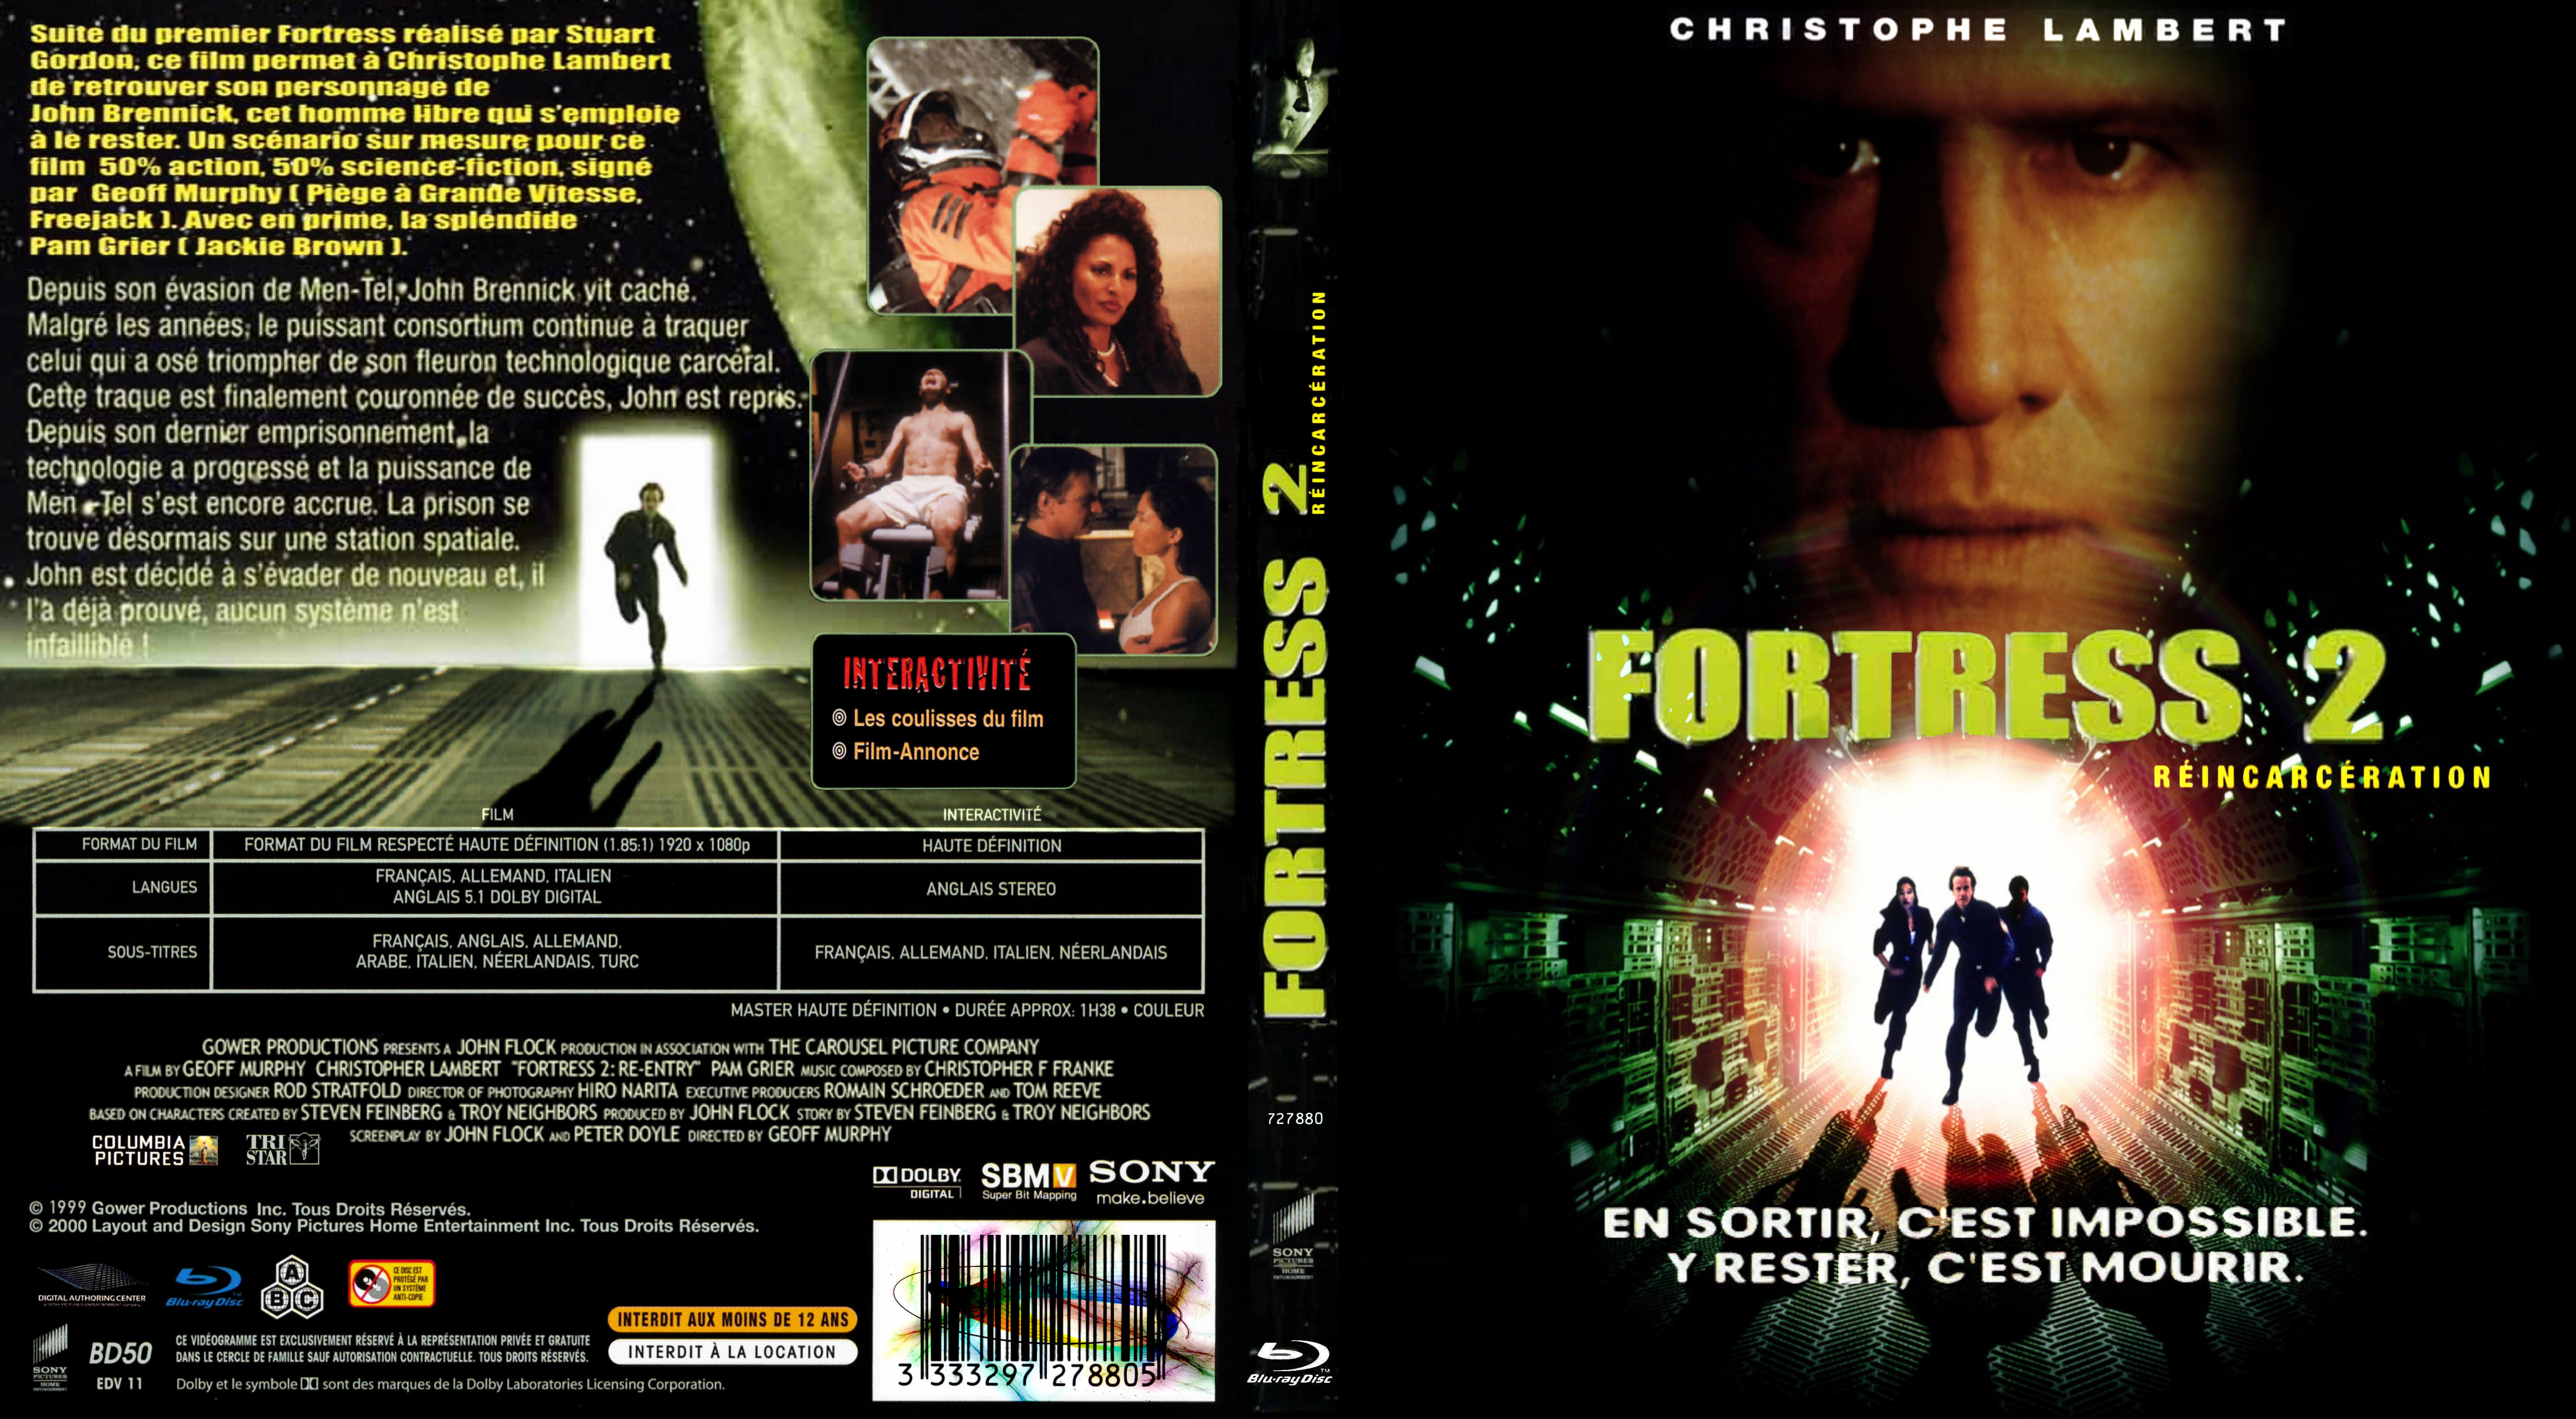 Jaquette DVD Fortress 2 custom (BLU-RAY)